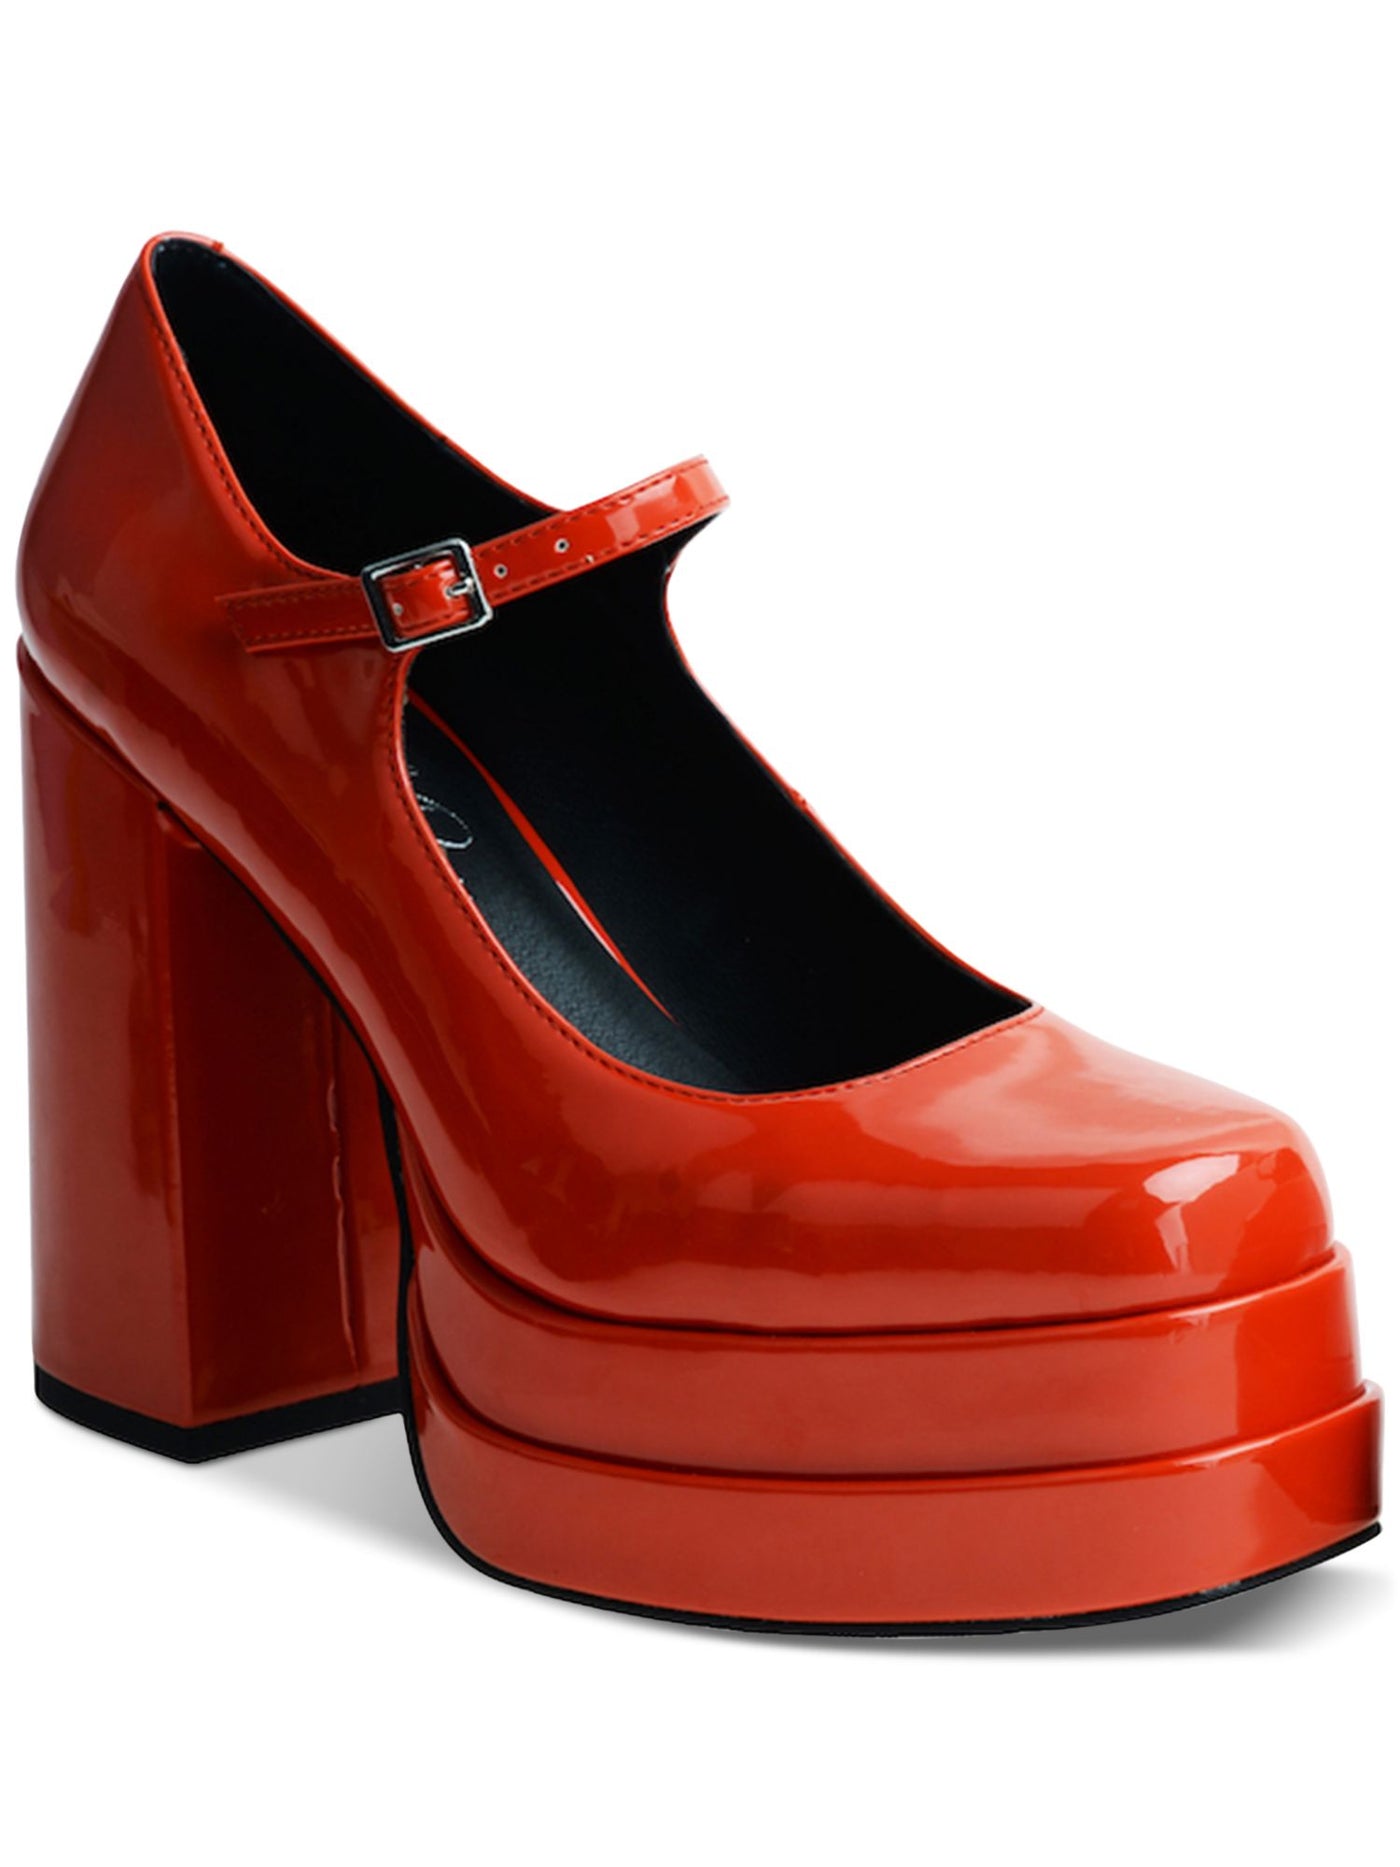 WILD PAIR Womens Red 1-1/2" Platform Adjustable Octavia Square Toe Block Heel Buckle Dress Pumps Shoes 10 M